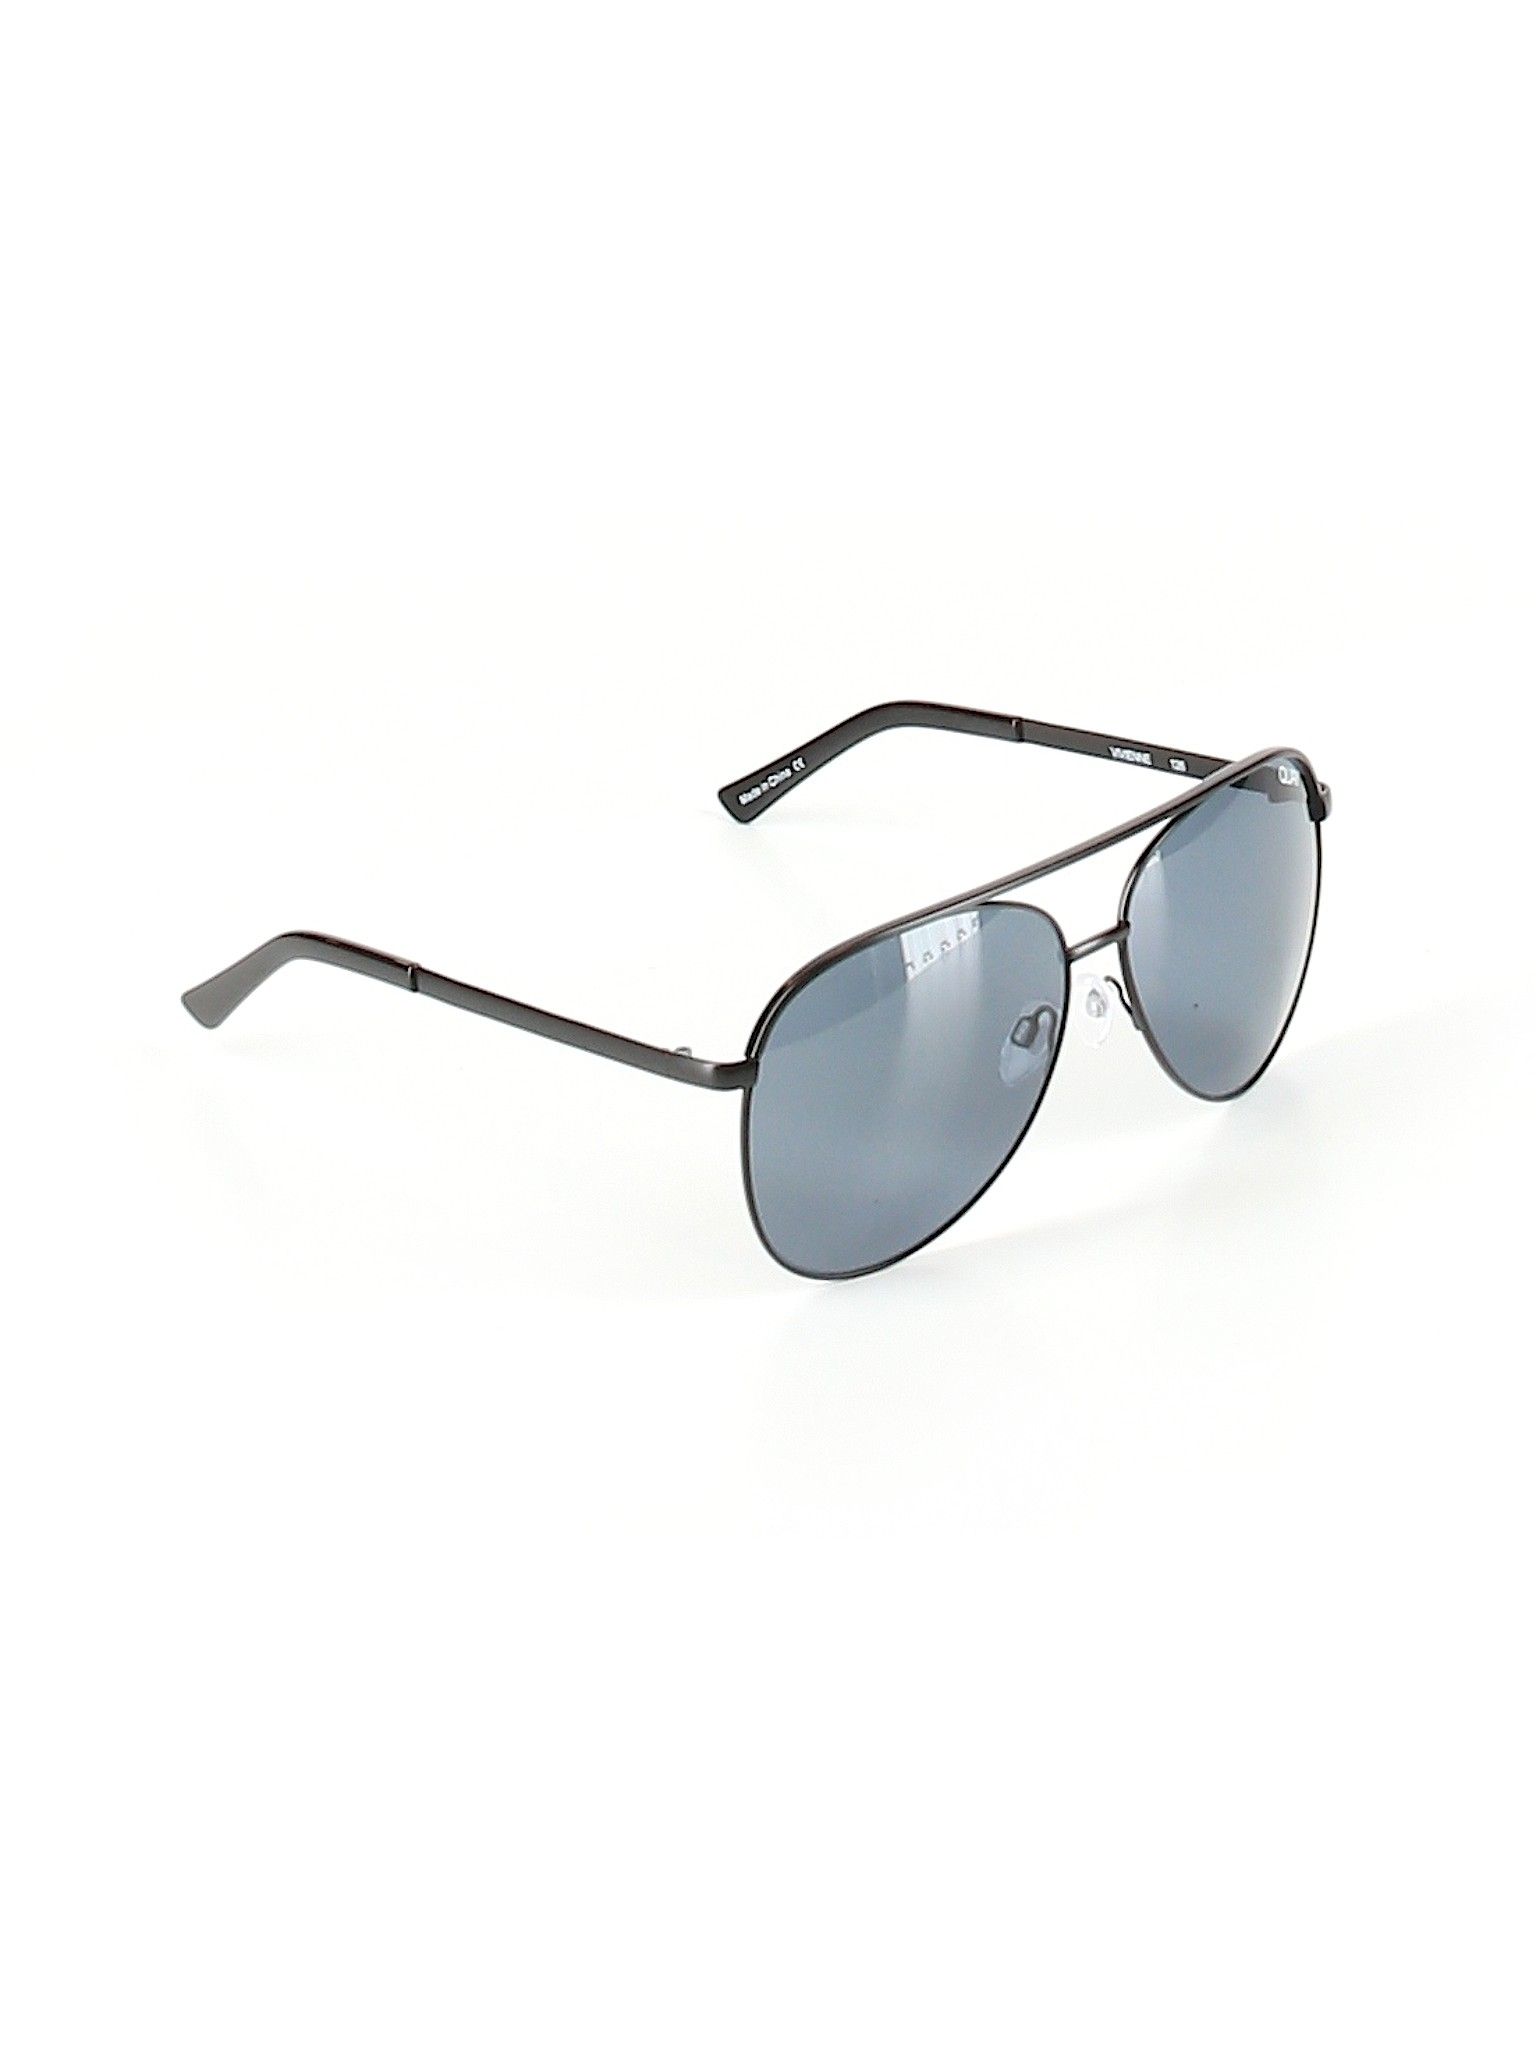 Quay Sunglasses Size 00: Black Women's Accessories - 55606389 | thredUP